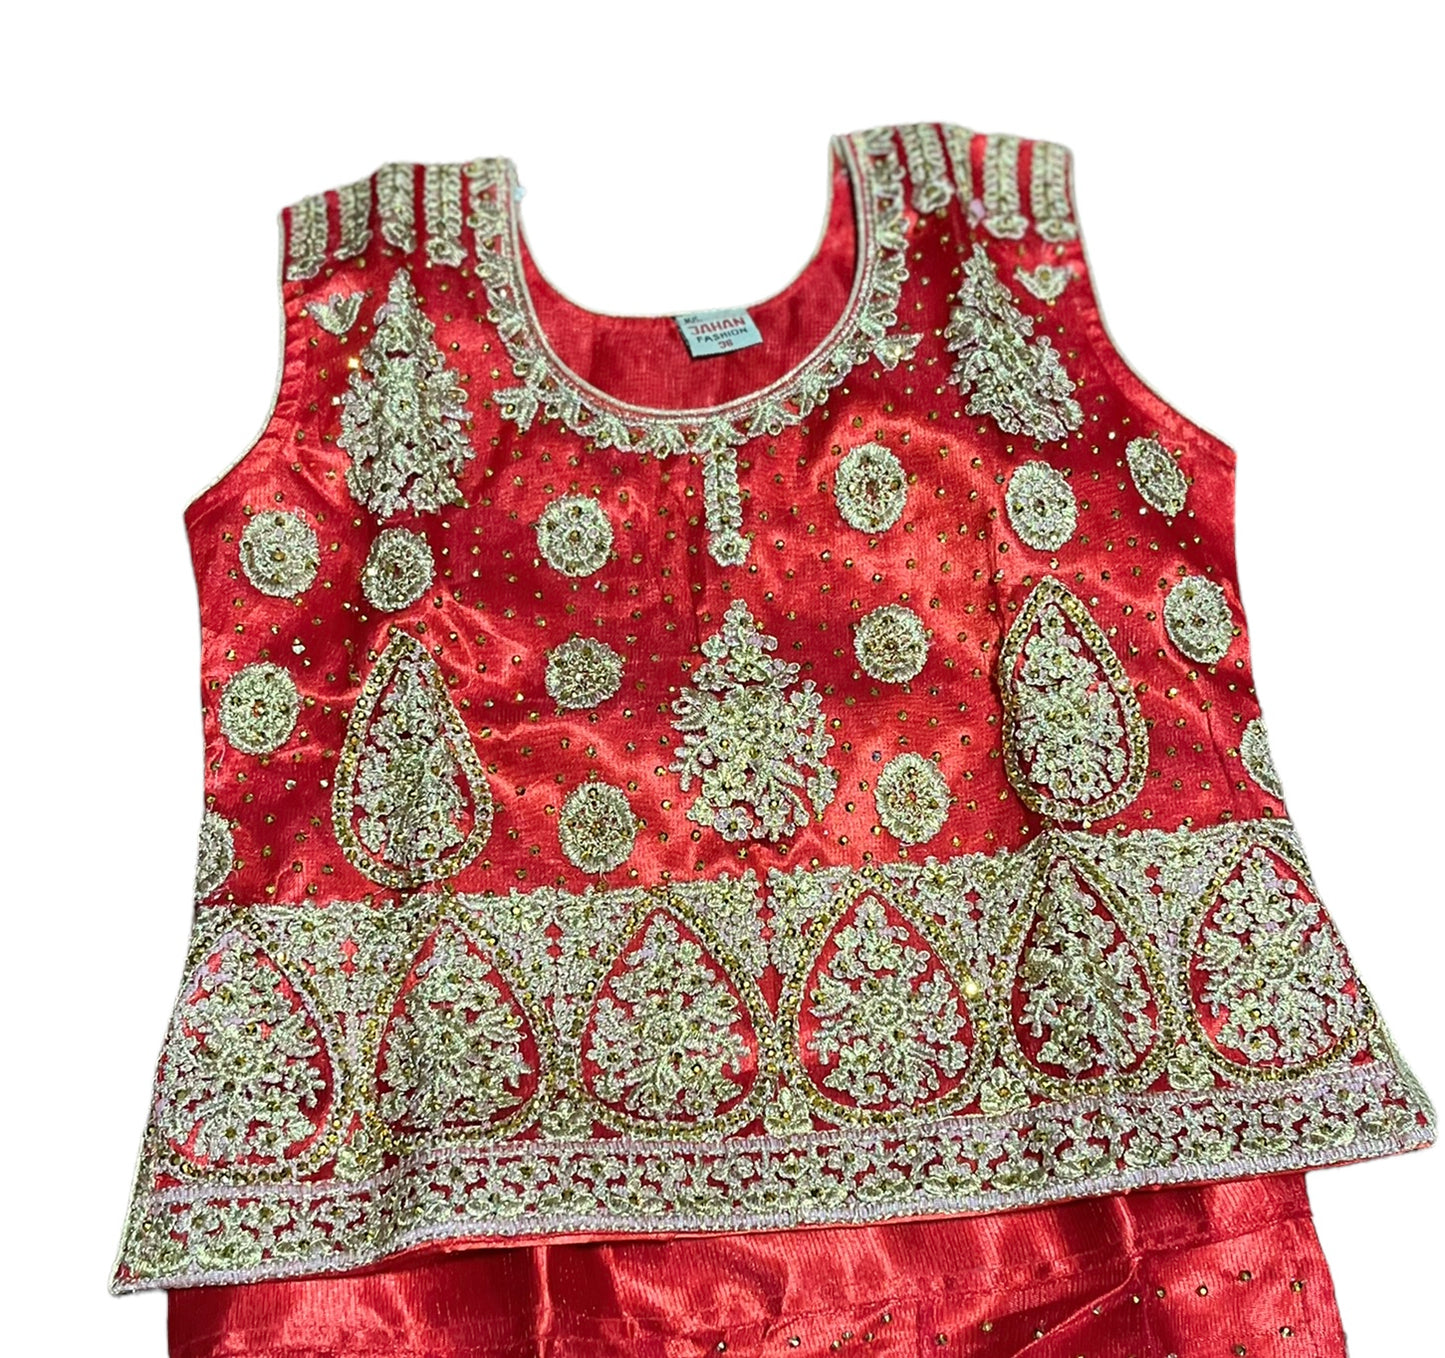 Princess Dreams: Girls' Embroidered Lehenga Choli Set